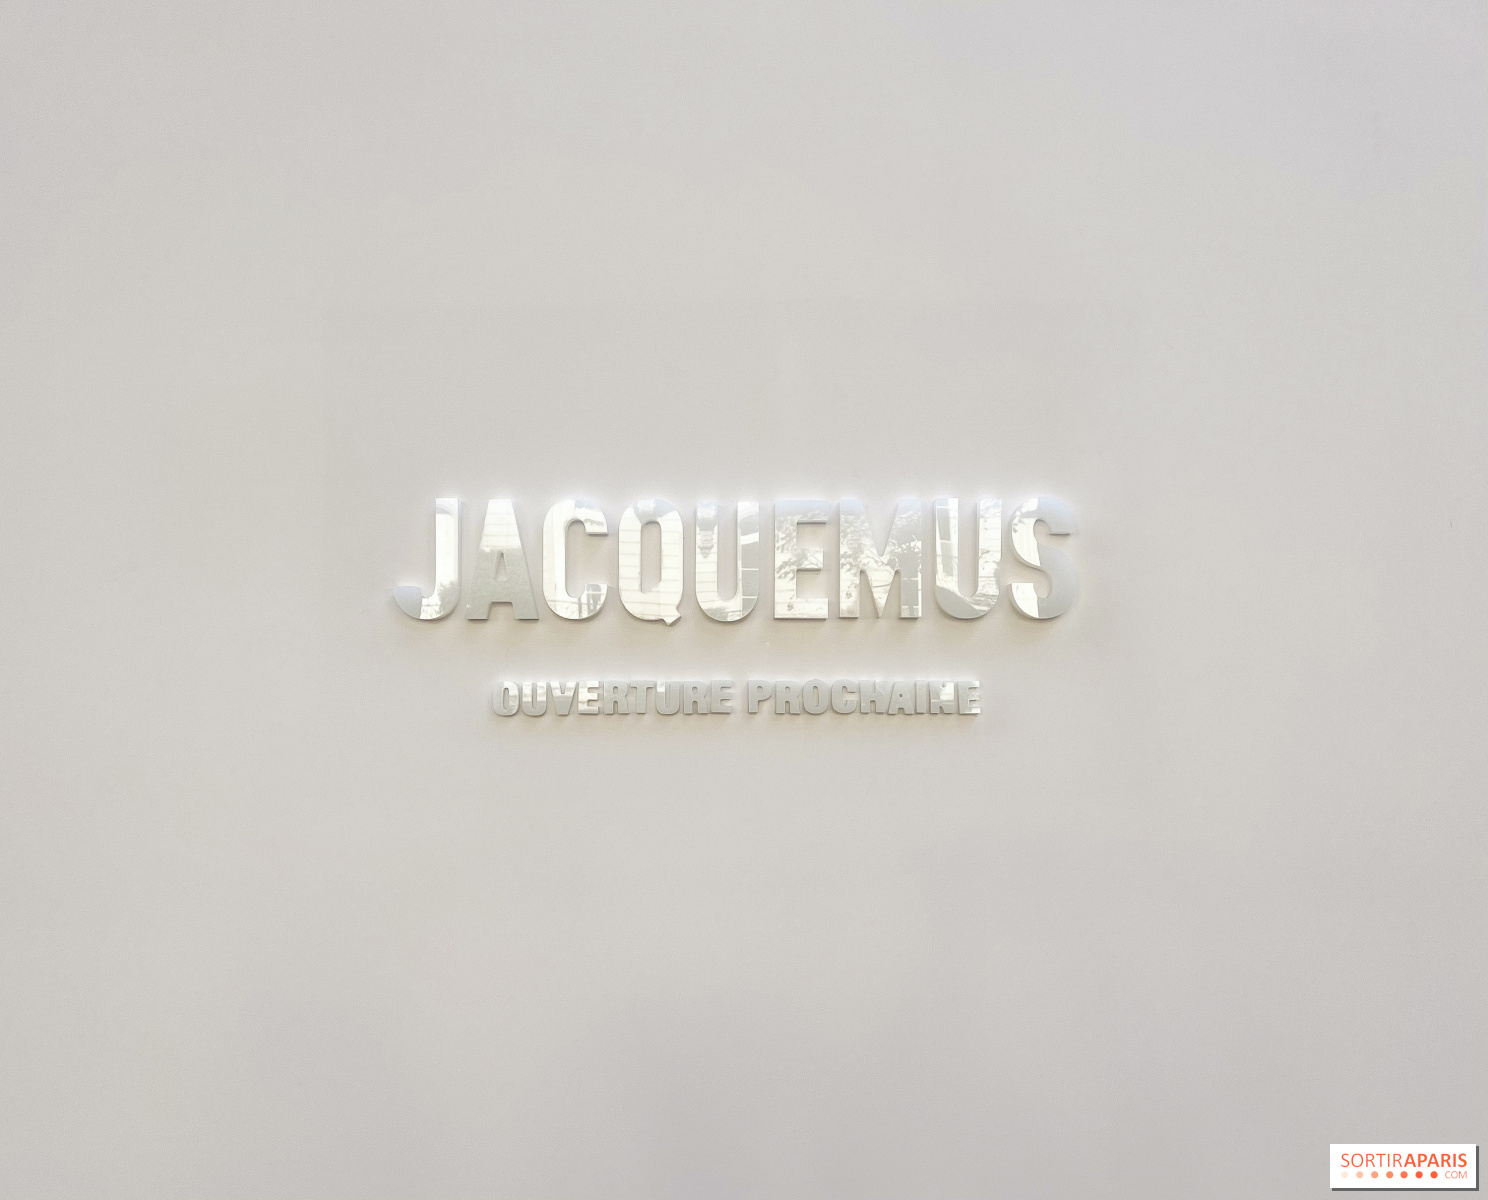 Jacquemus opens its first boutique in Paris - Domus